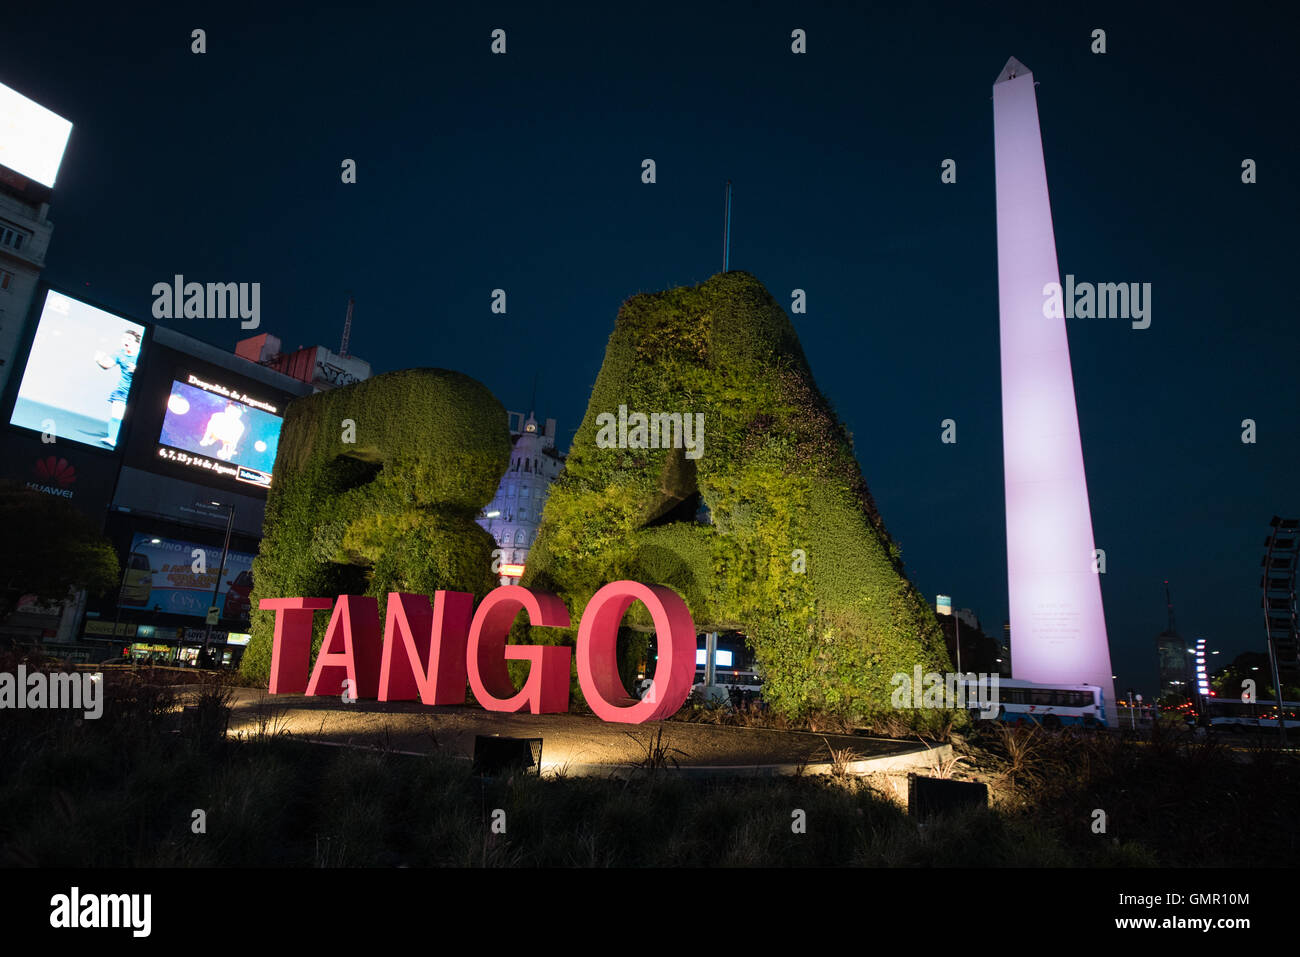 Buenos Aires, Argentina - 15 Aug 2016: Instalación de Tango frente al Obelisco. Foto de stock